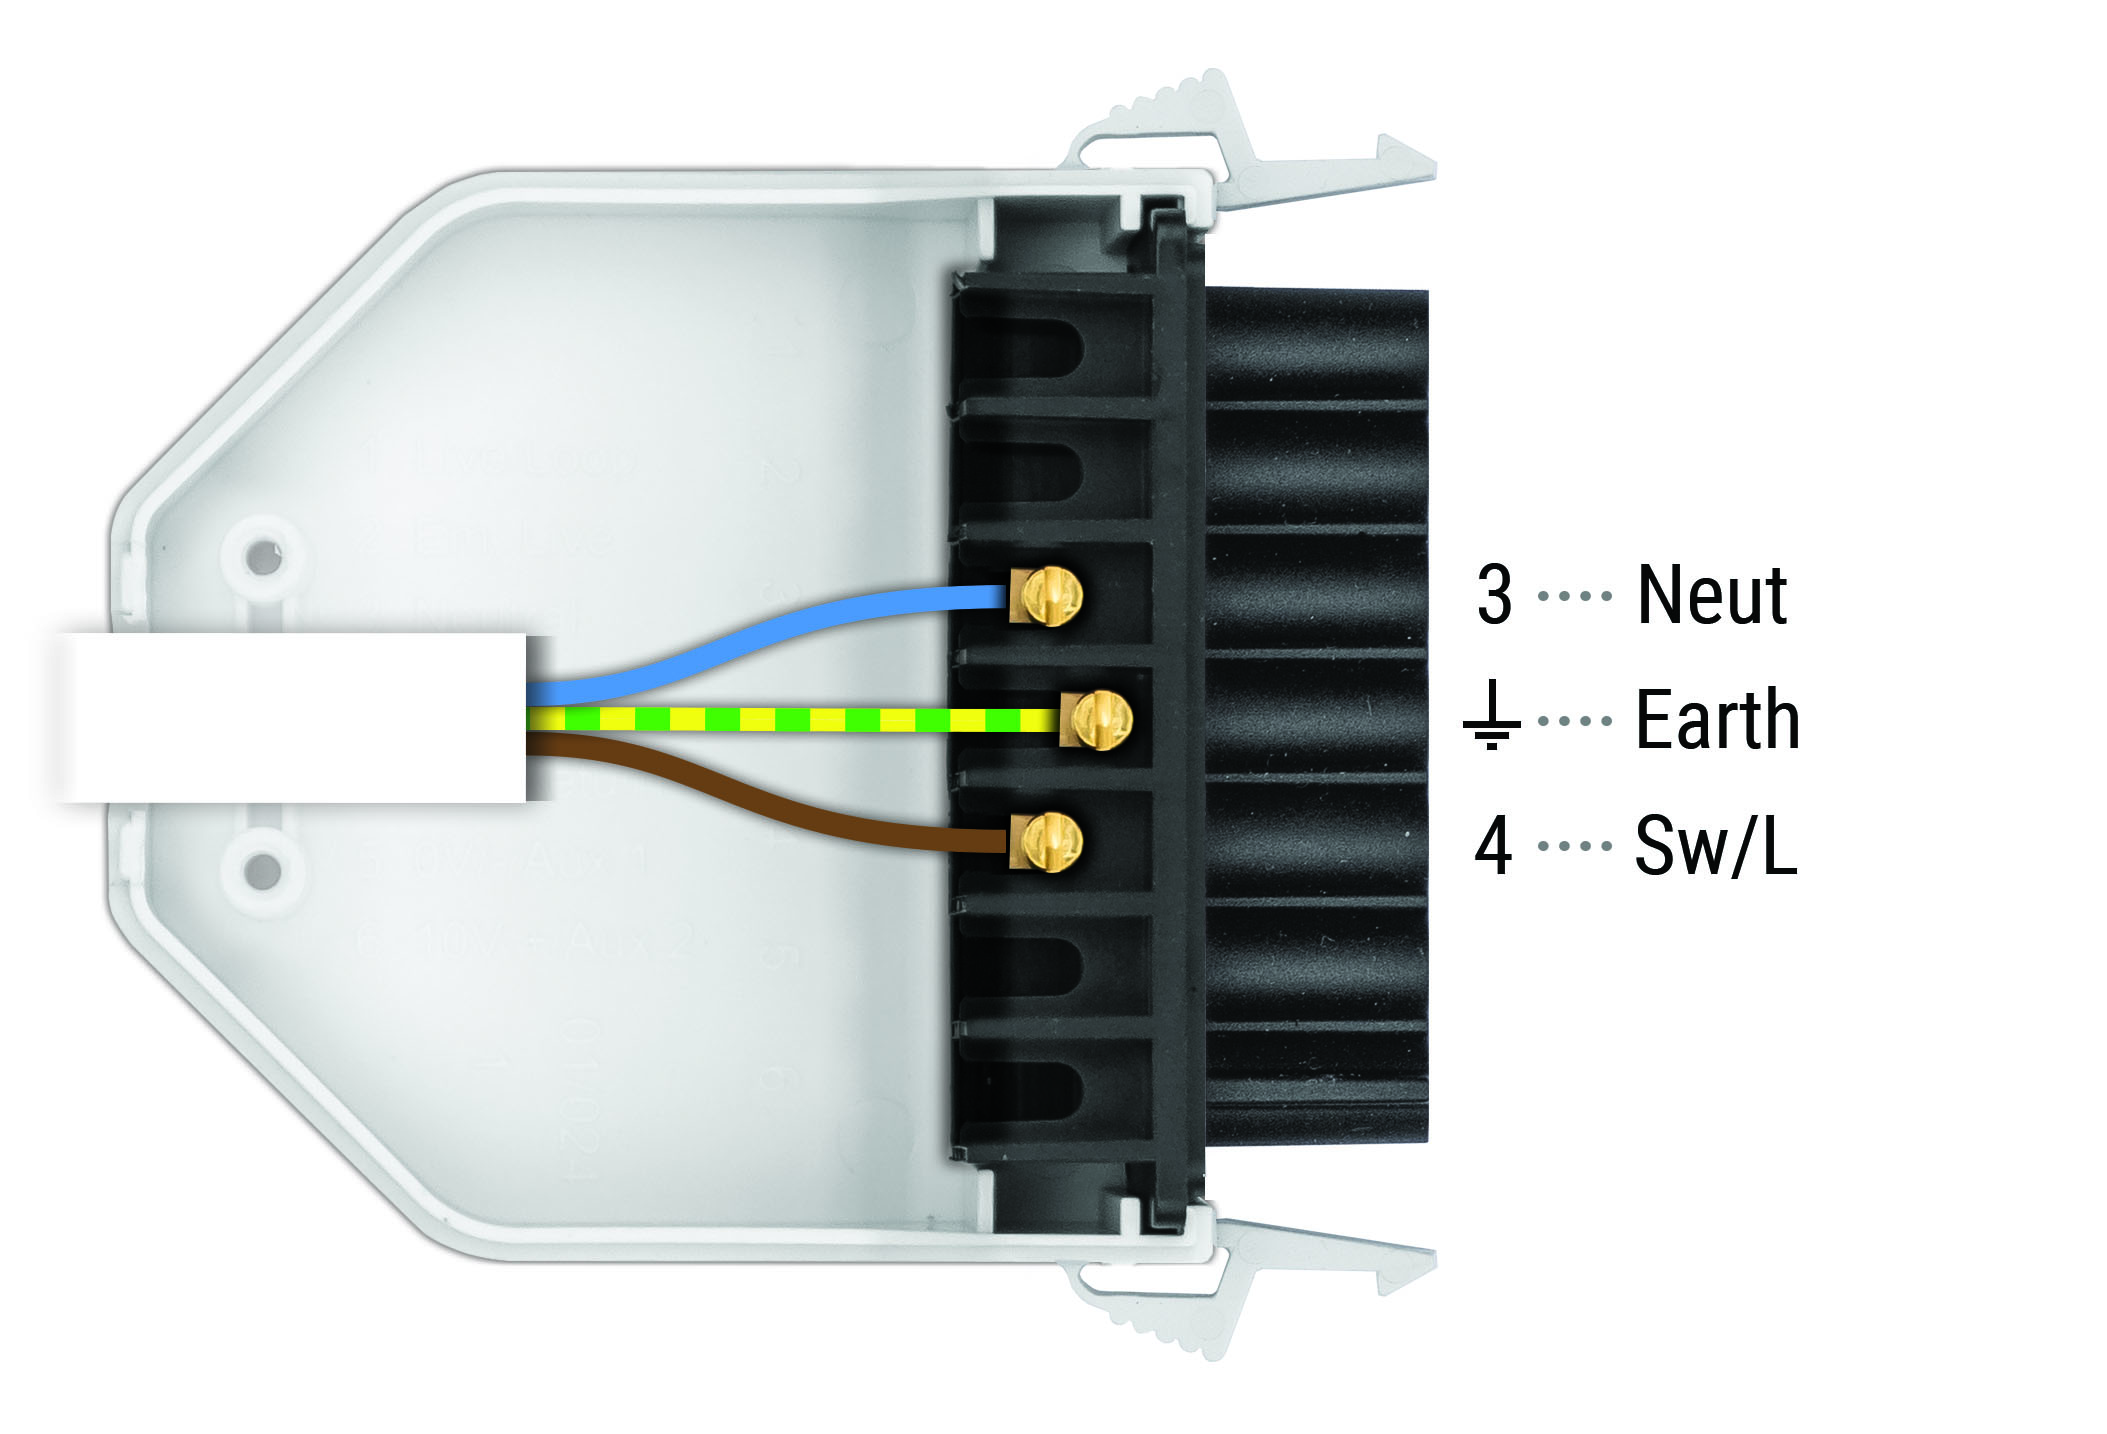 flex7 3-Pole Cable Mount Socket Wiring Diagram